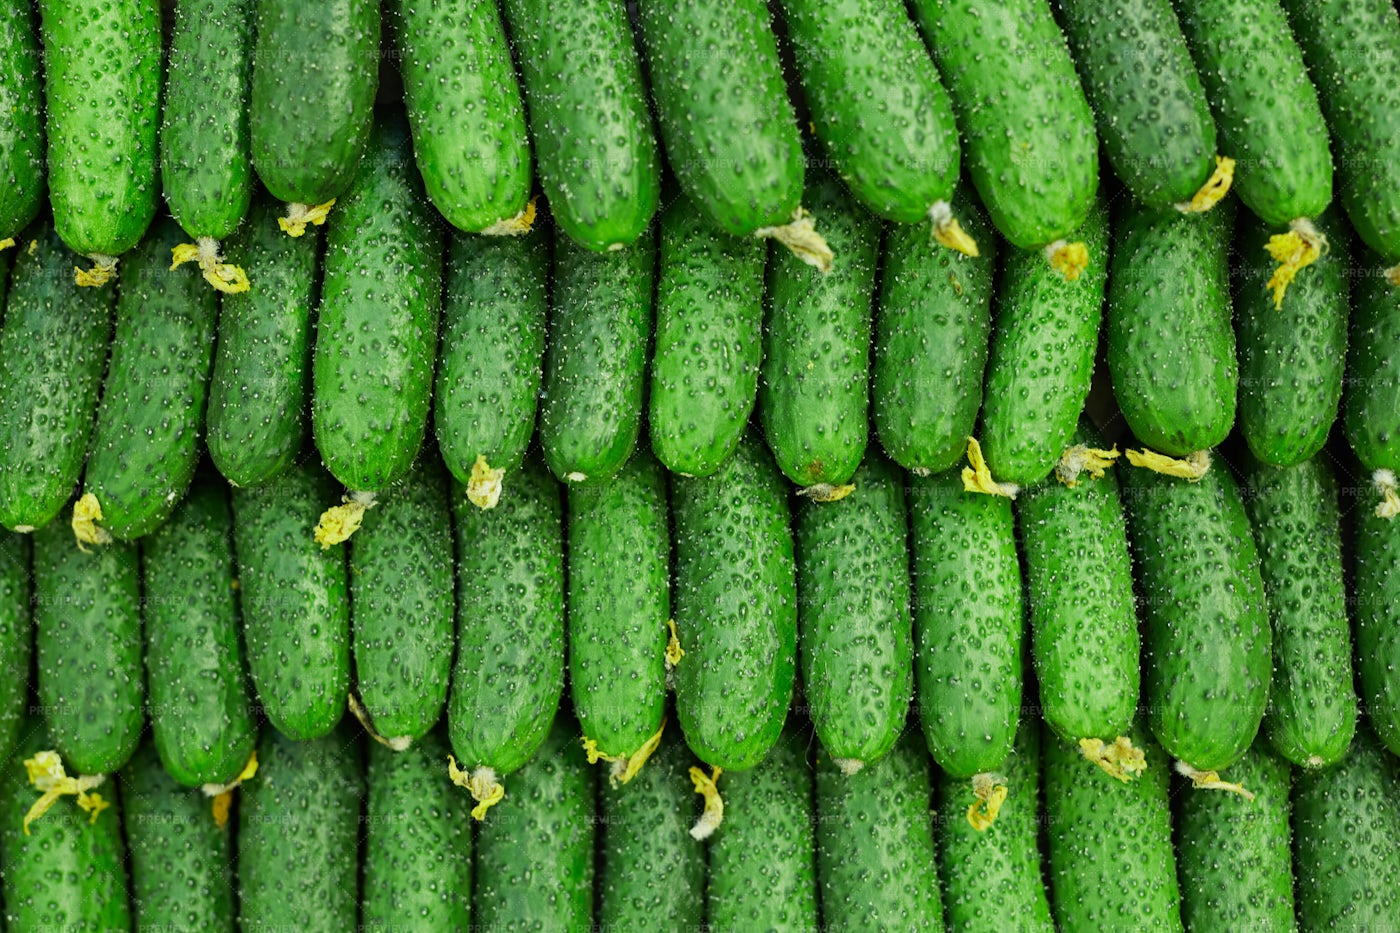 Image Of Fresh Cucumbers: Stock Photos